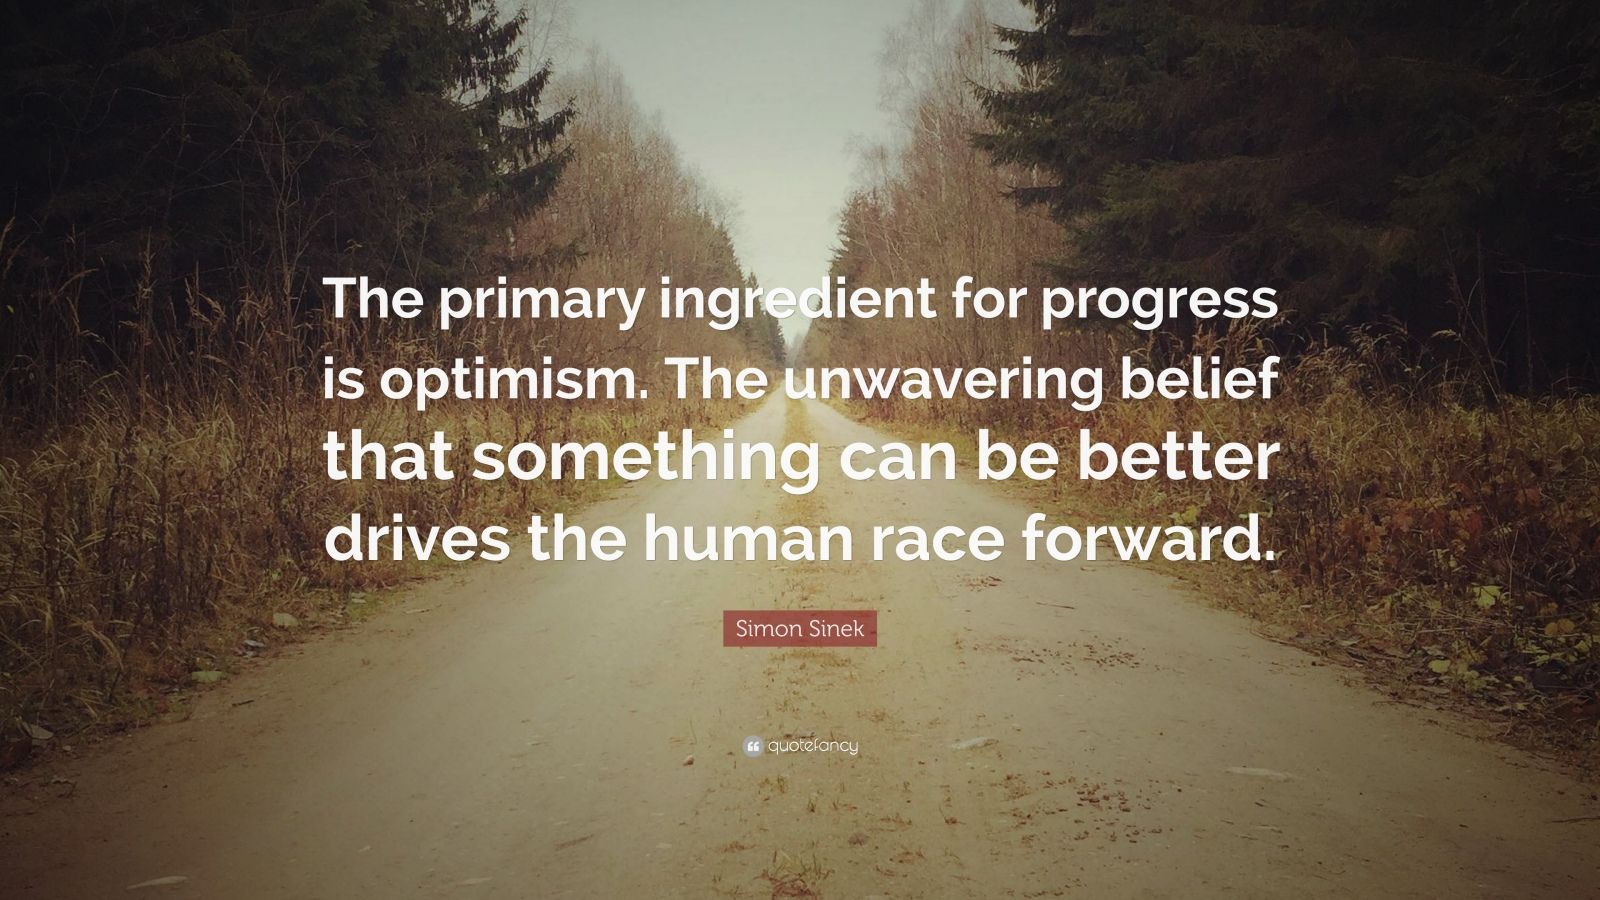 Simon Sinek Quote: “The primary ingredient for progress is optimism